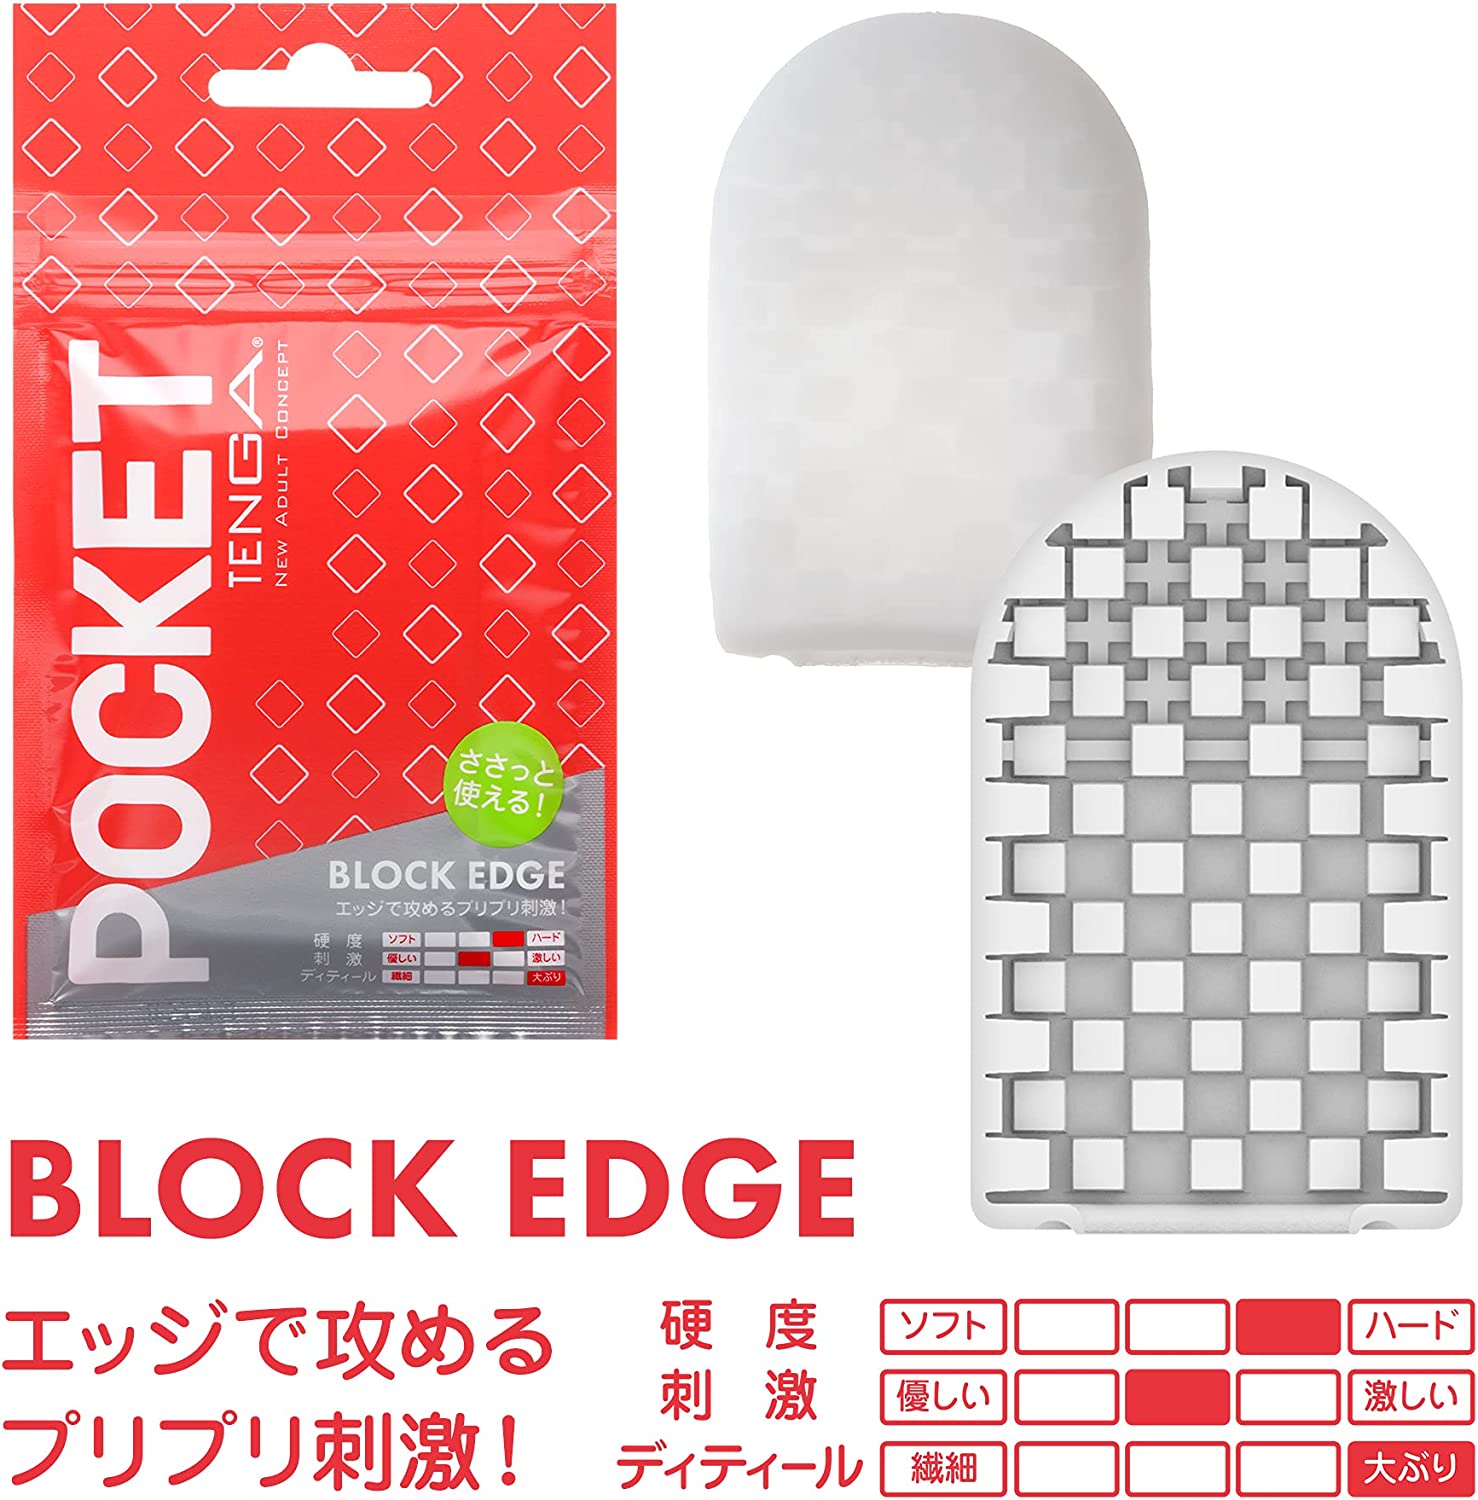 TENGA Pocket POT-003 Block Edge Male Masturbator,Red